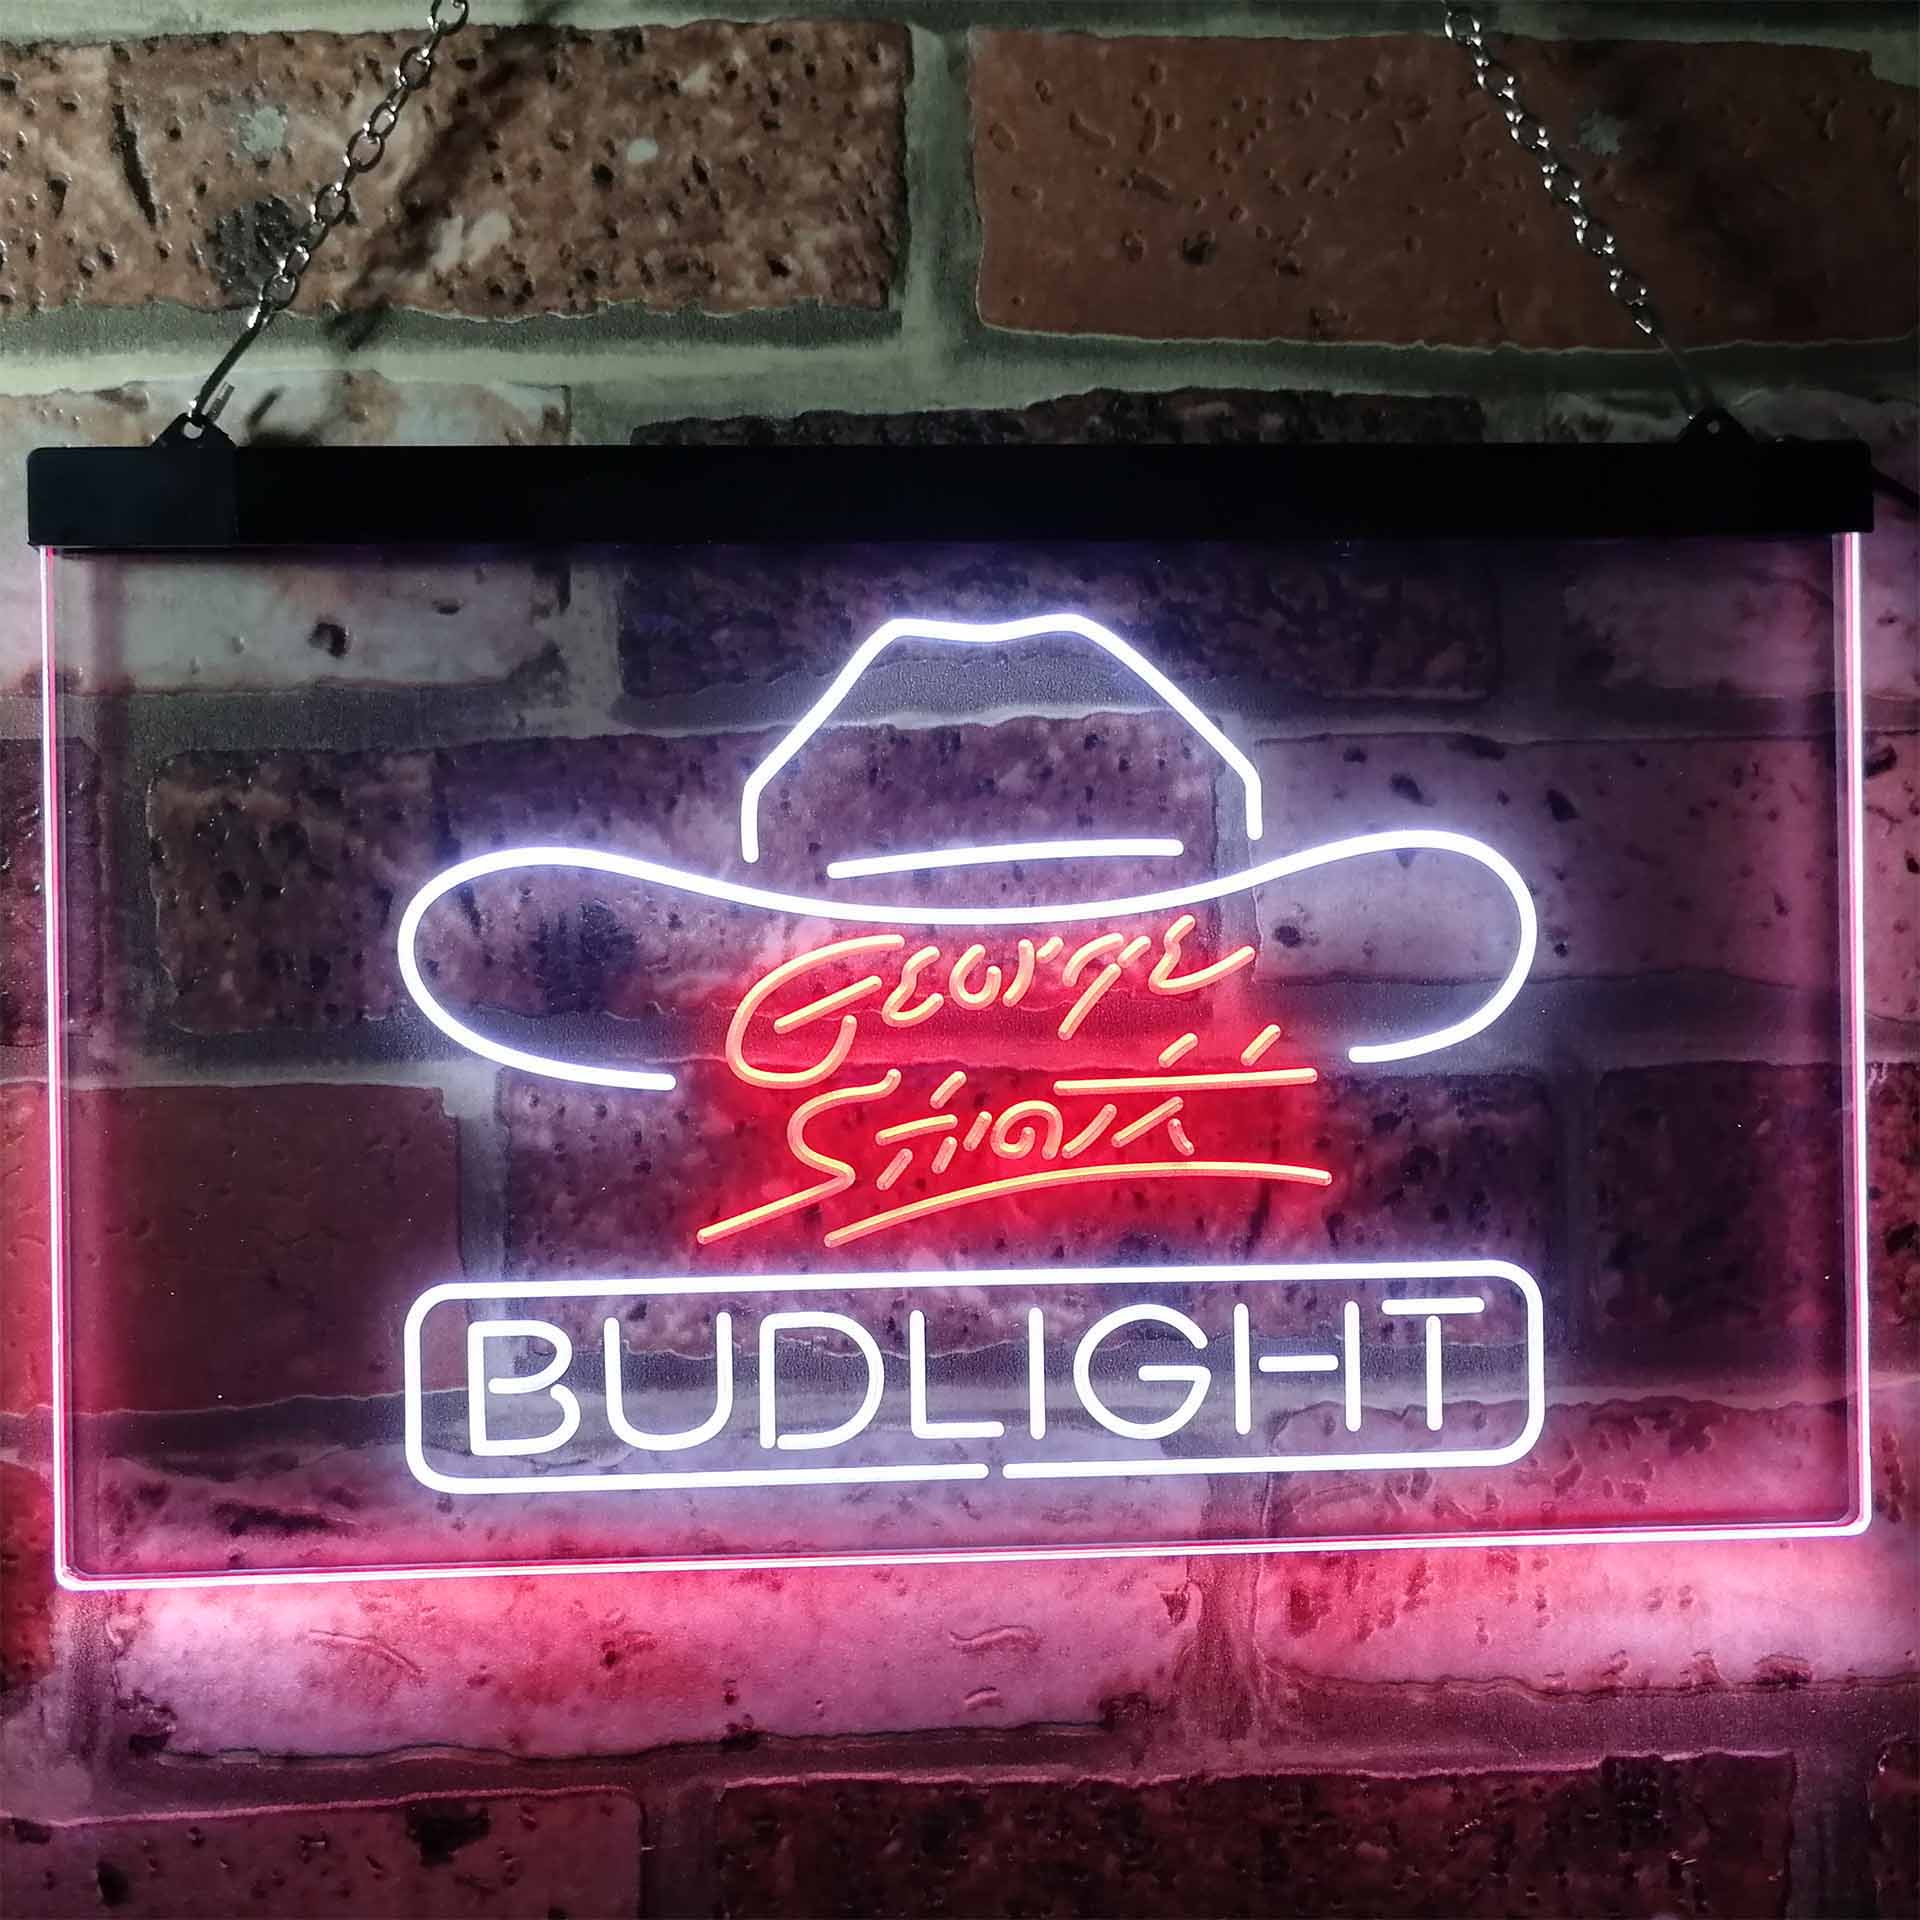 George Strait Buds Light Music Beer Bar Decor LED Neon Sign